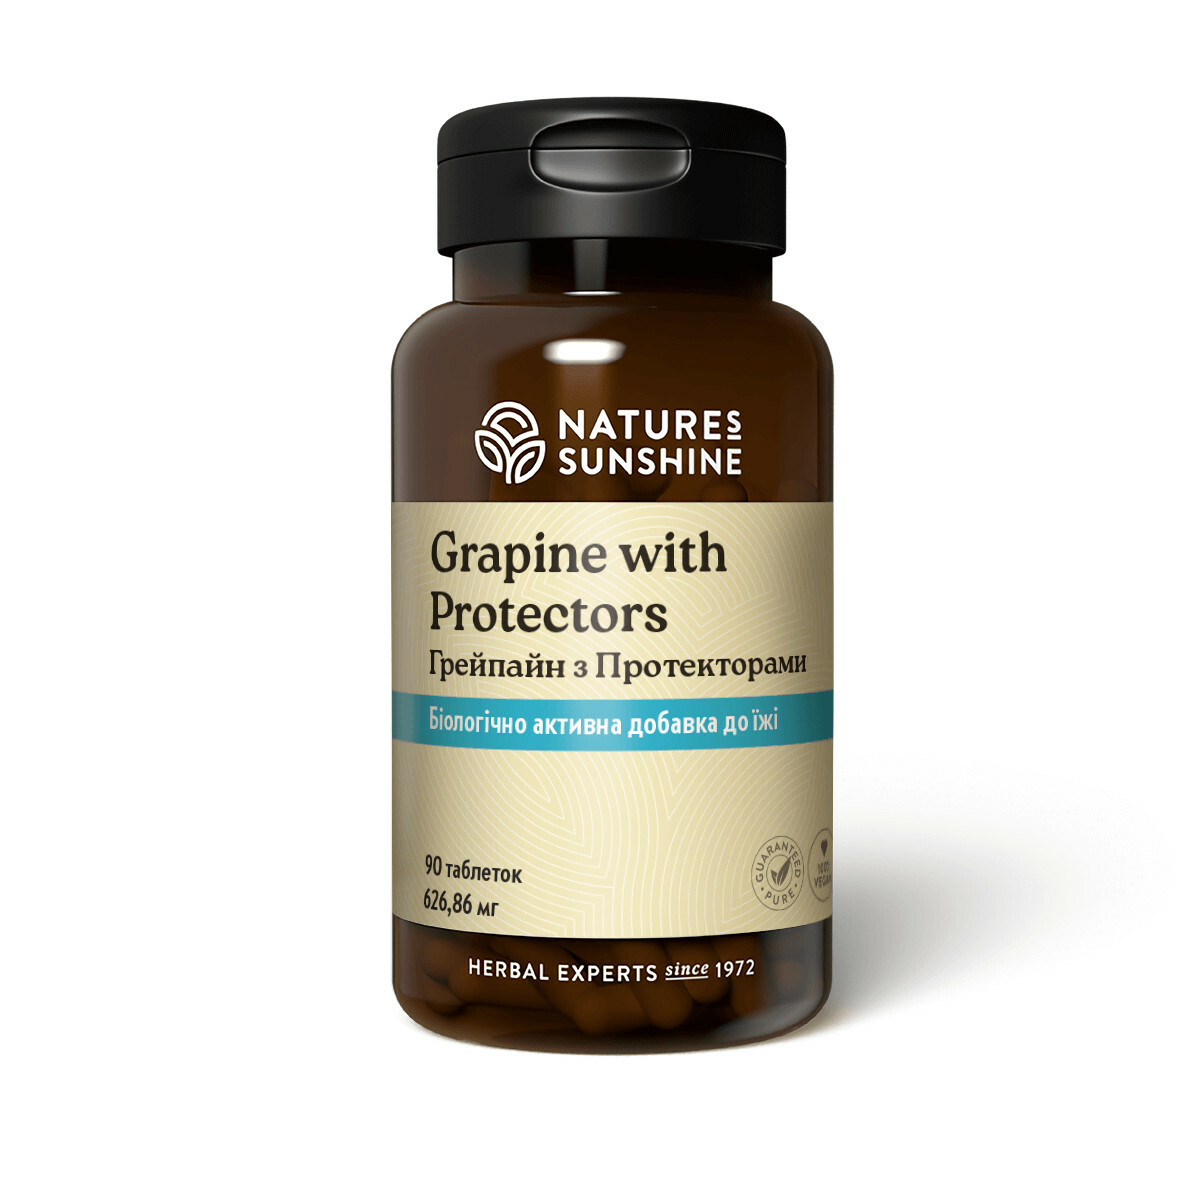 Grapine with Protectors* - Грэйпайн с протектором* - БАД Nature's Sunshine Products (NSP)